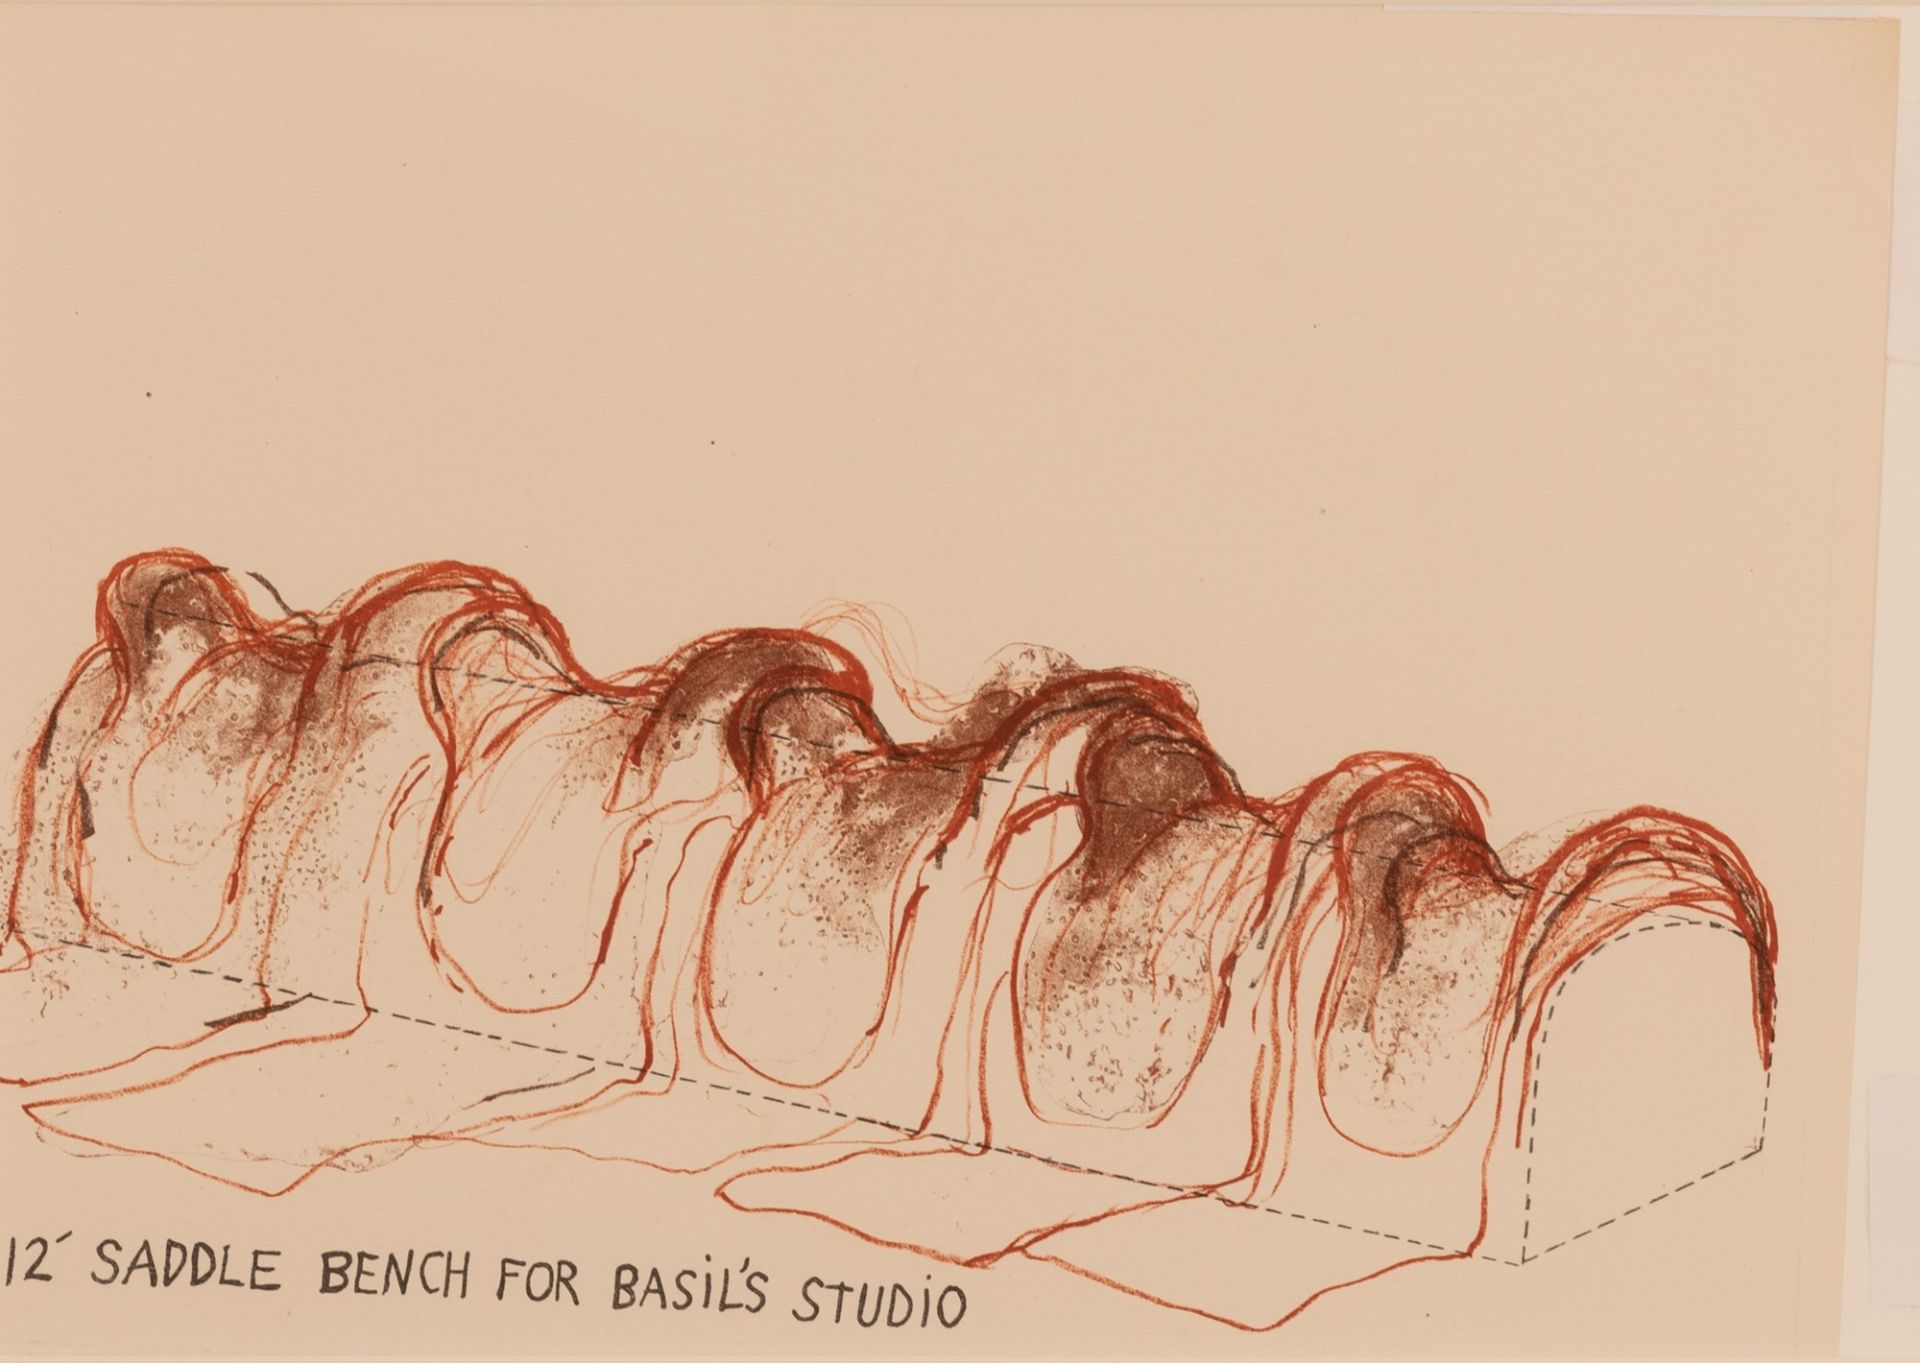 Jim Dine 
(Cincinnati, 1935 - ) 
12' Saddle Bench for Basil's Studio (Saddle Bench) 
